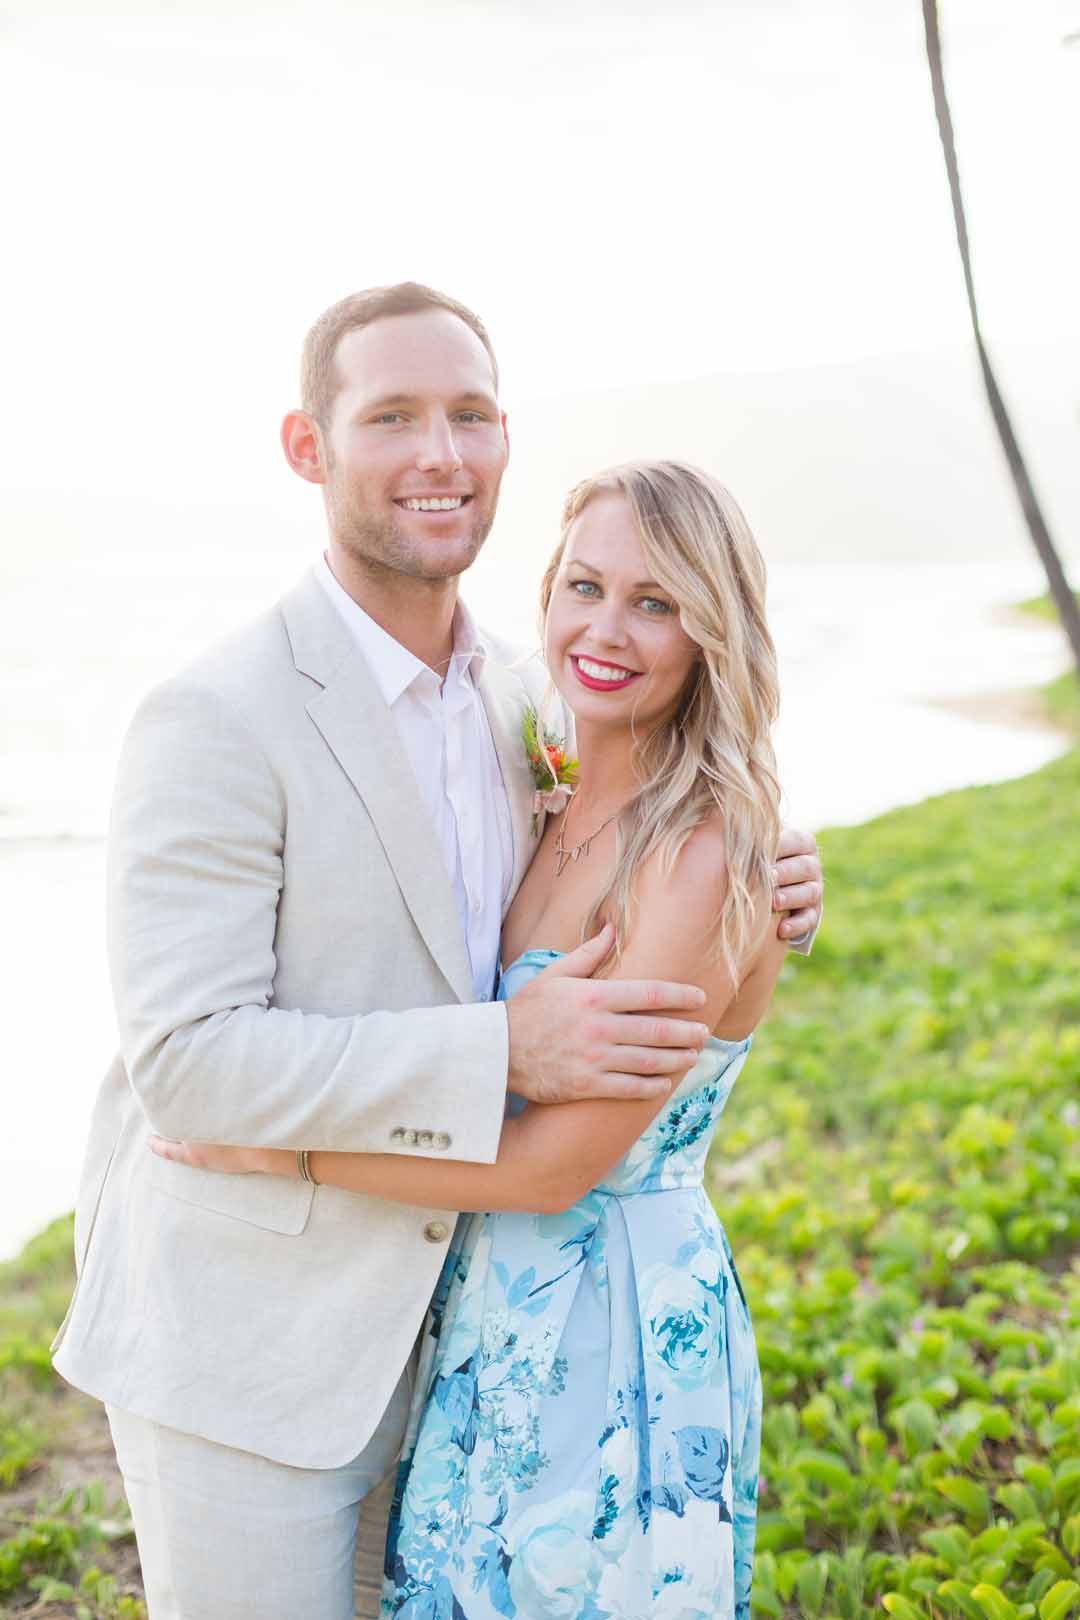 amynichols.com | Where get married Maui | Maui Wedding Planner